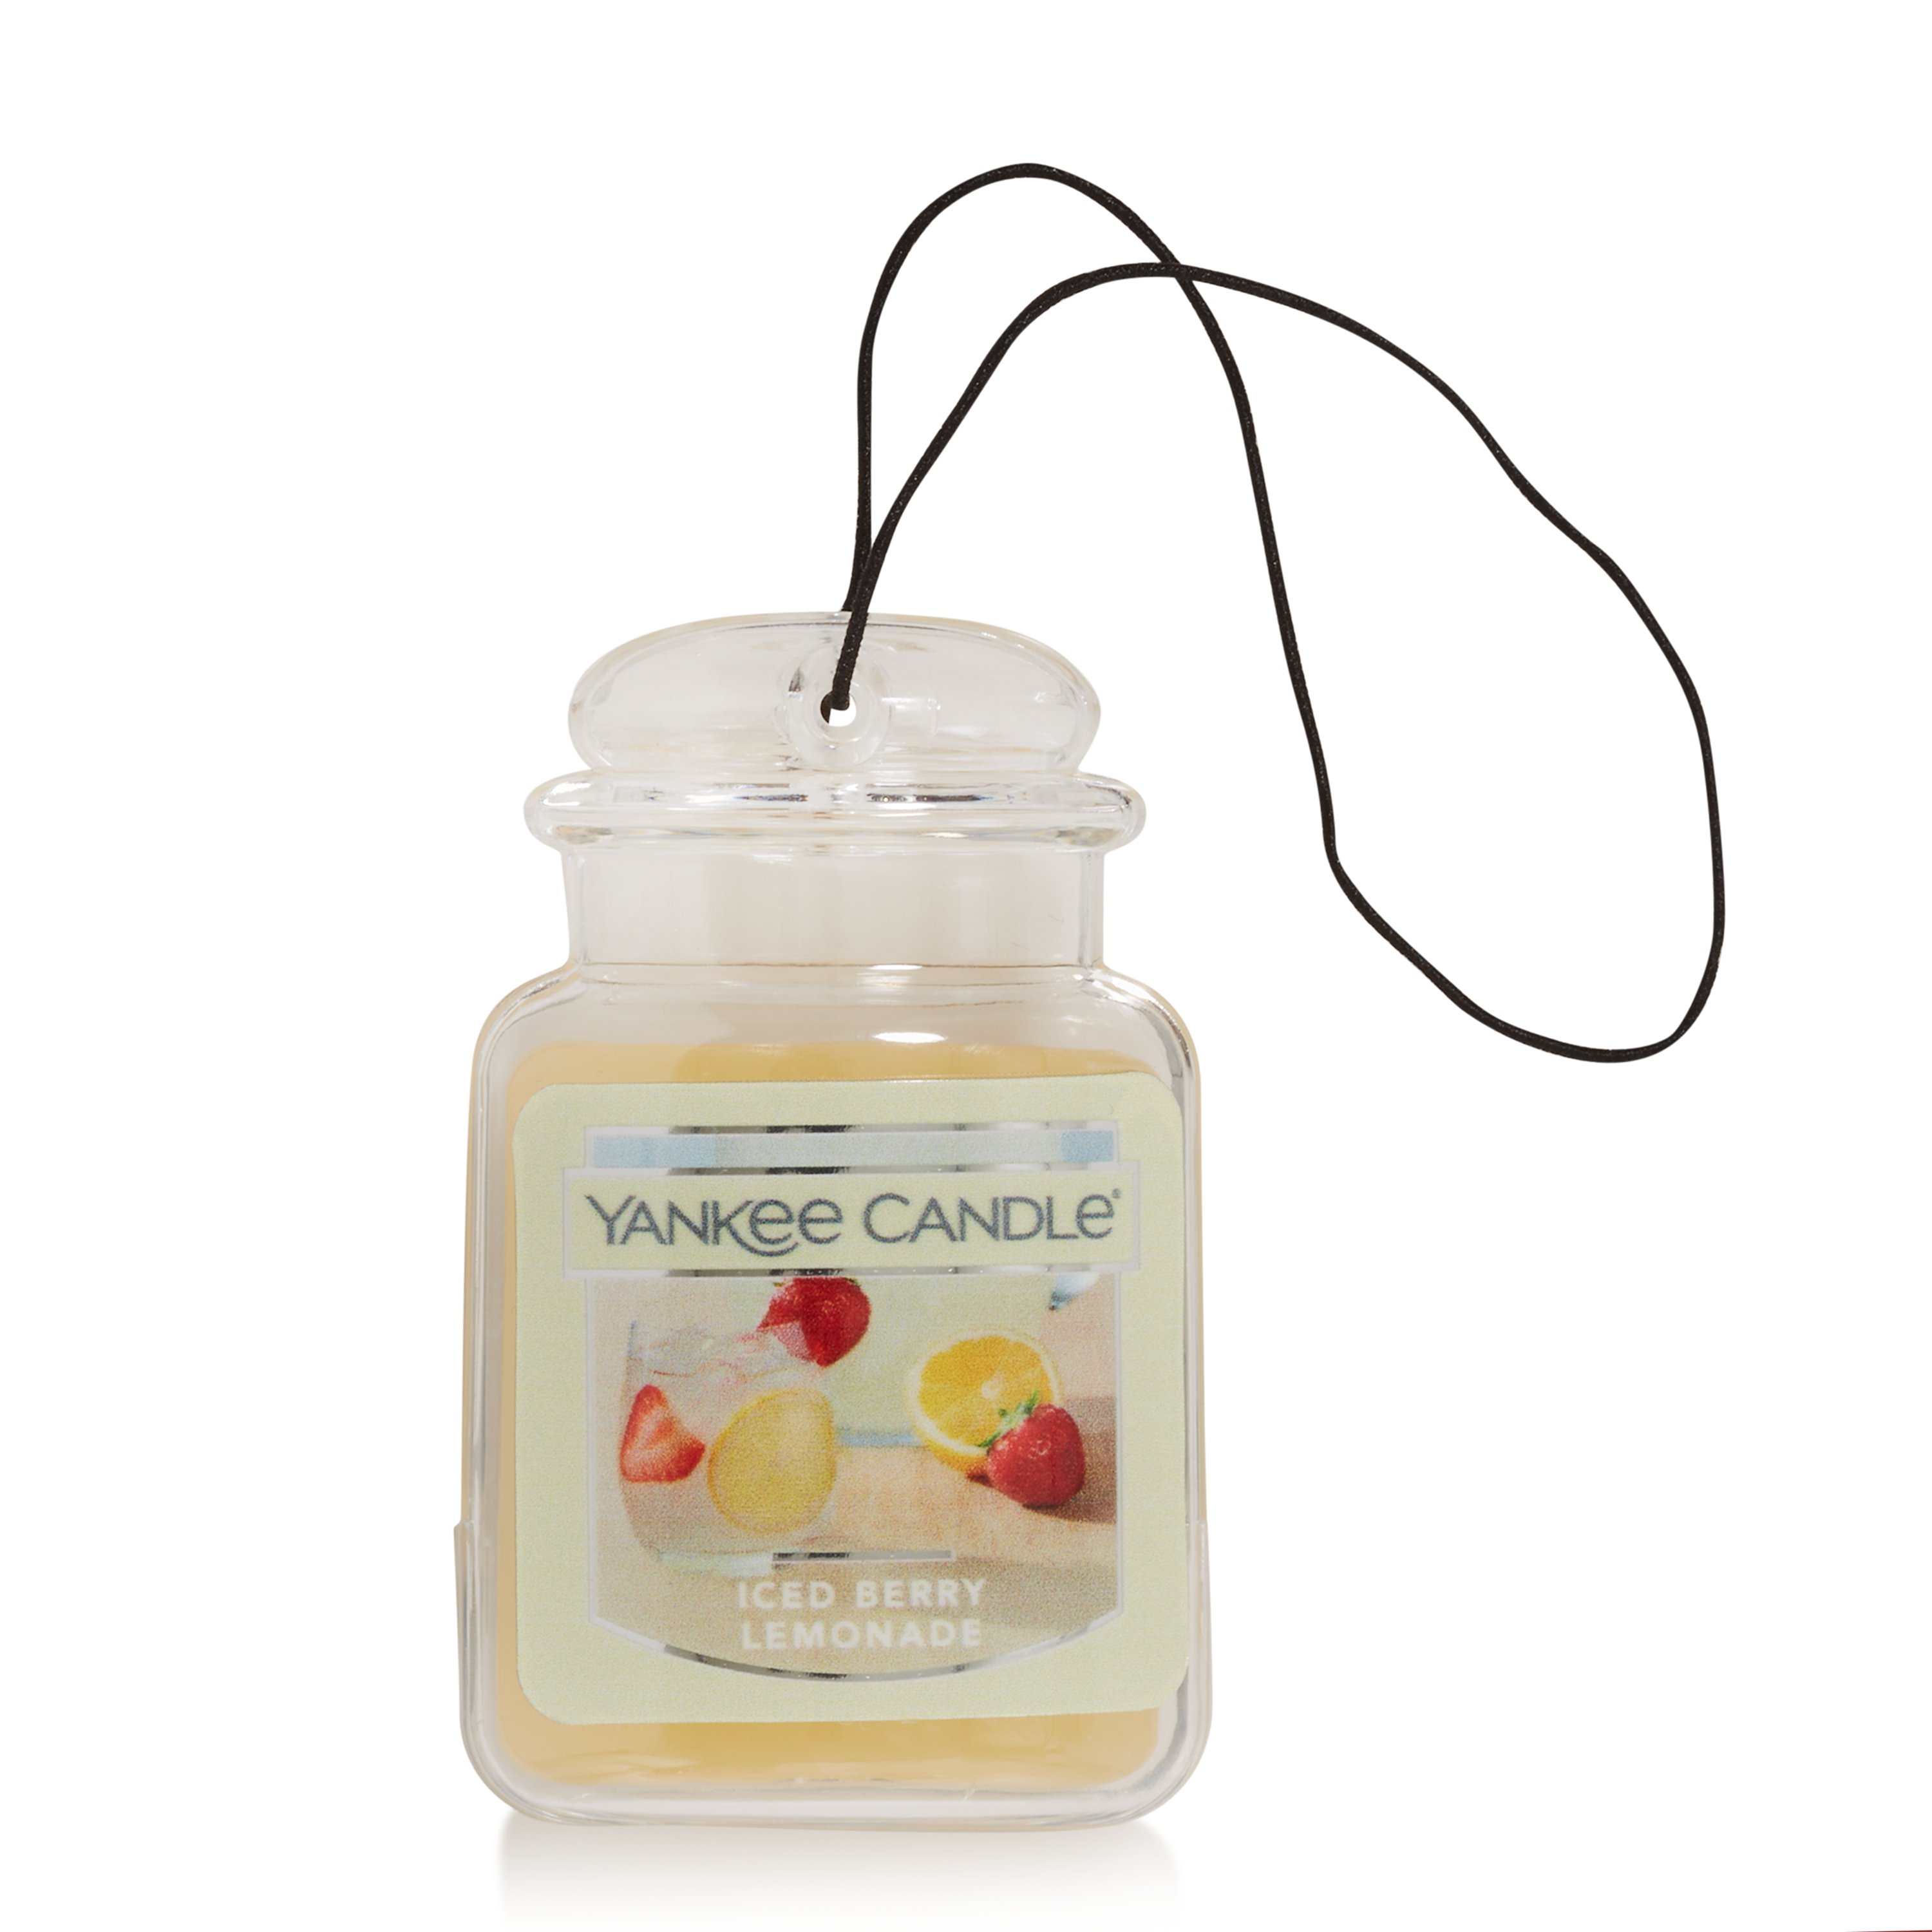  Yankee Candle parfum pour voiture Car Jar Ultimate